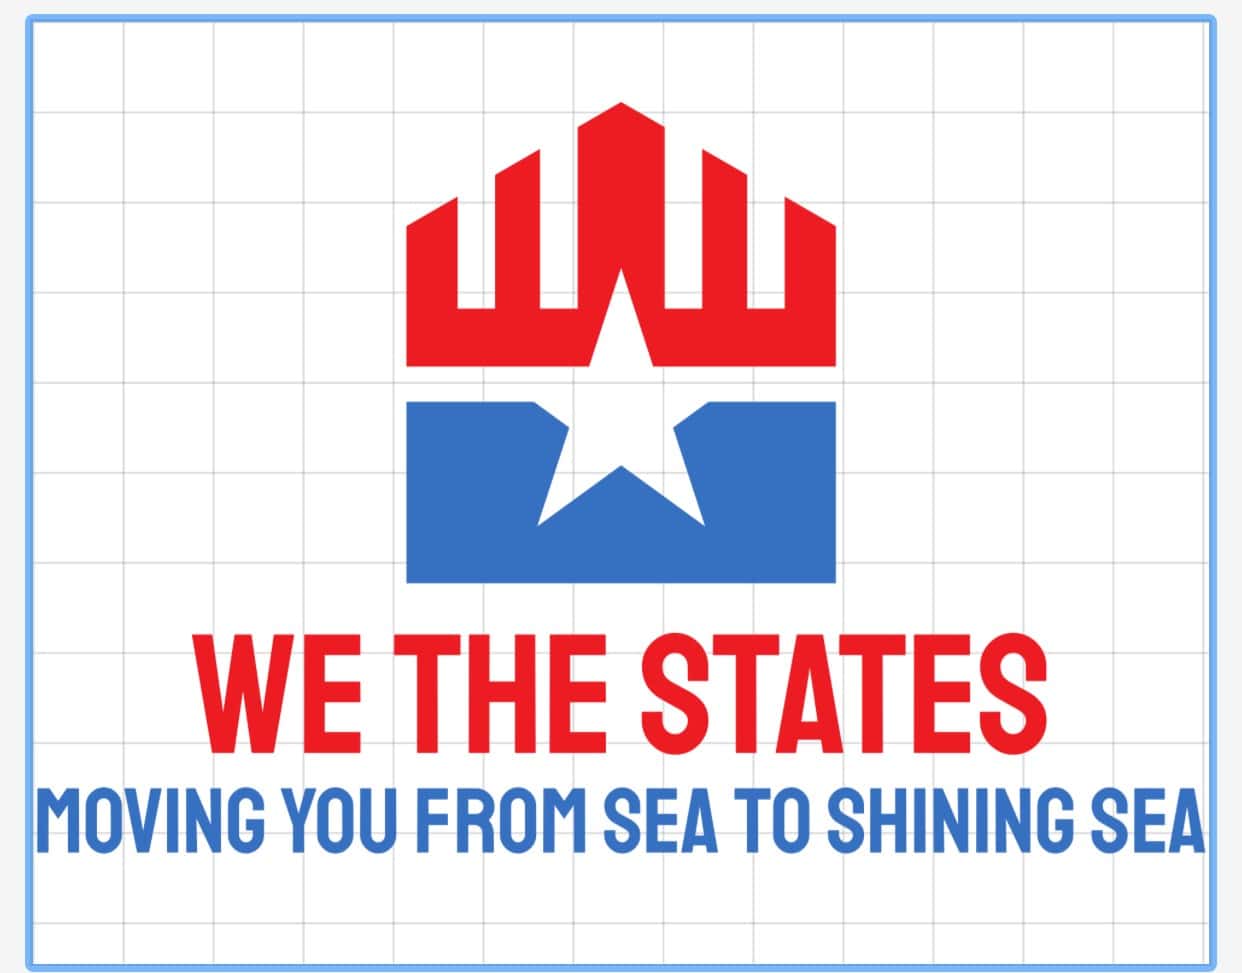 We the states logo